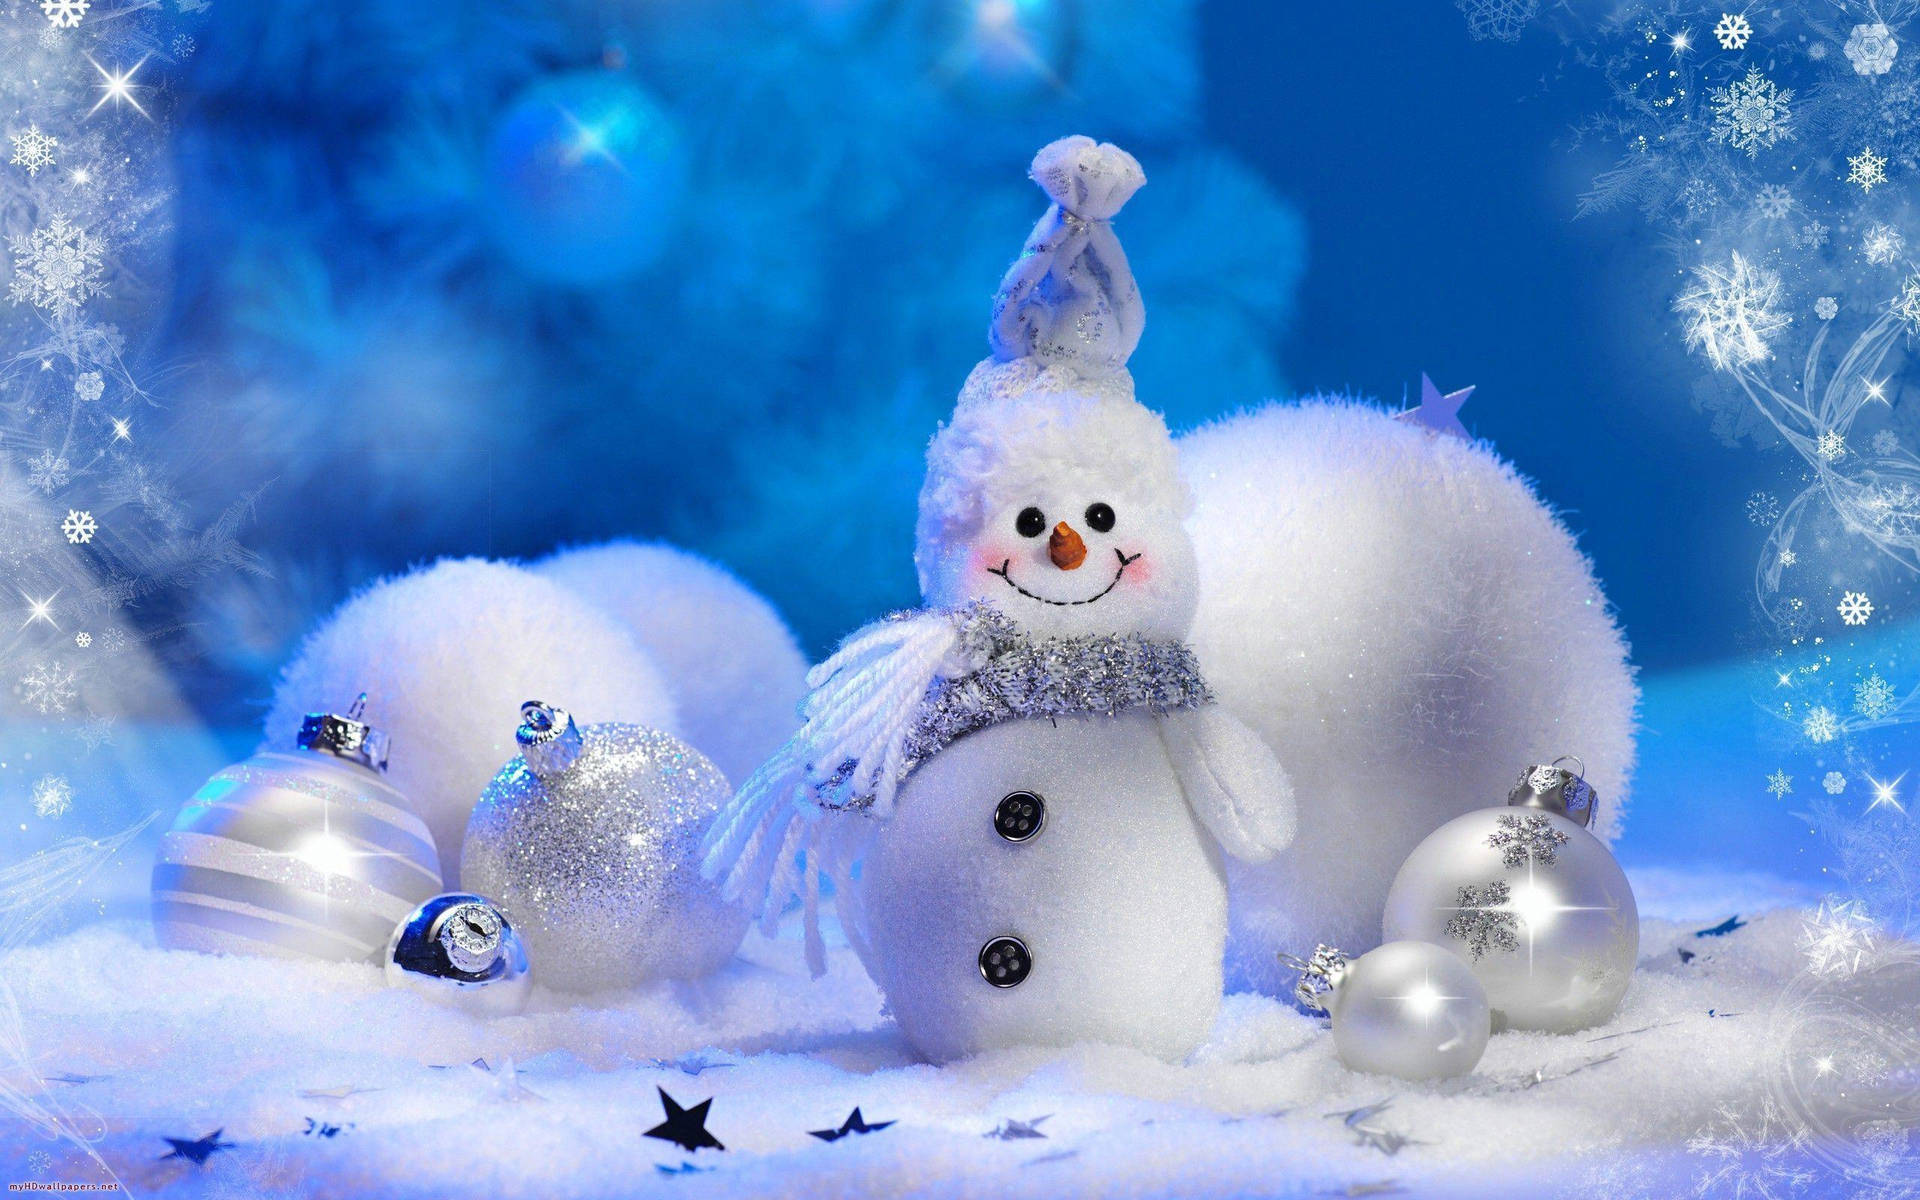 Pretty White Christmas With Snowman